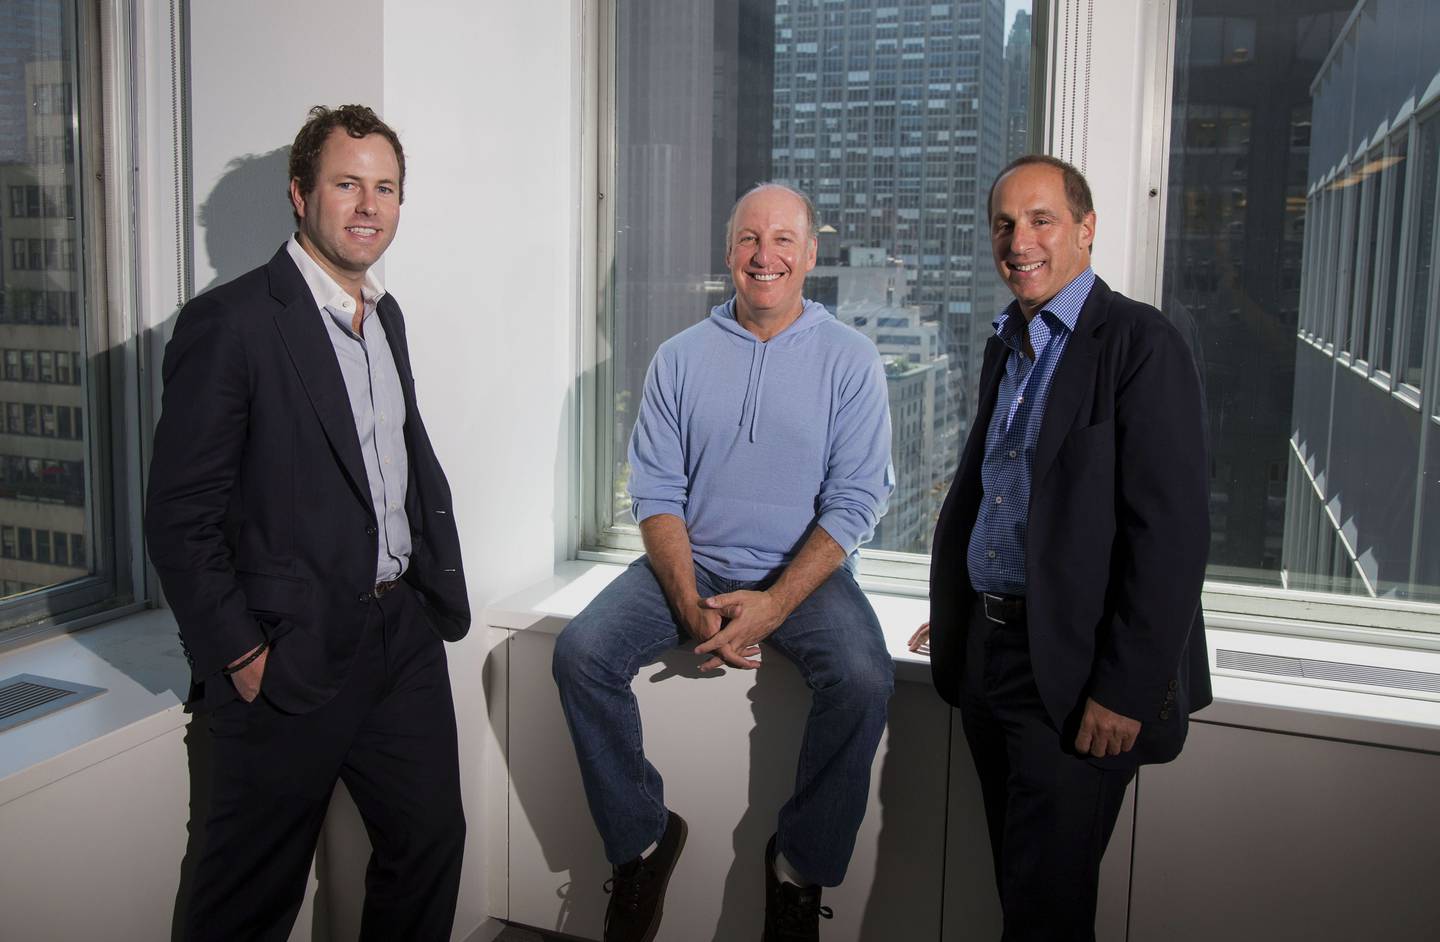 From left: Schonfeld Groups CIO Ryan Tolkin, founder Steven Schonfeld, and President Andrew Fishman. Photographer: Michael Nagle/Bloombergdfd